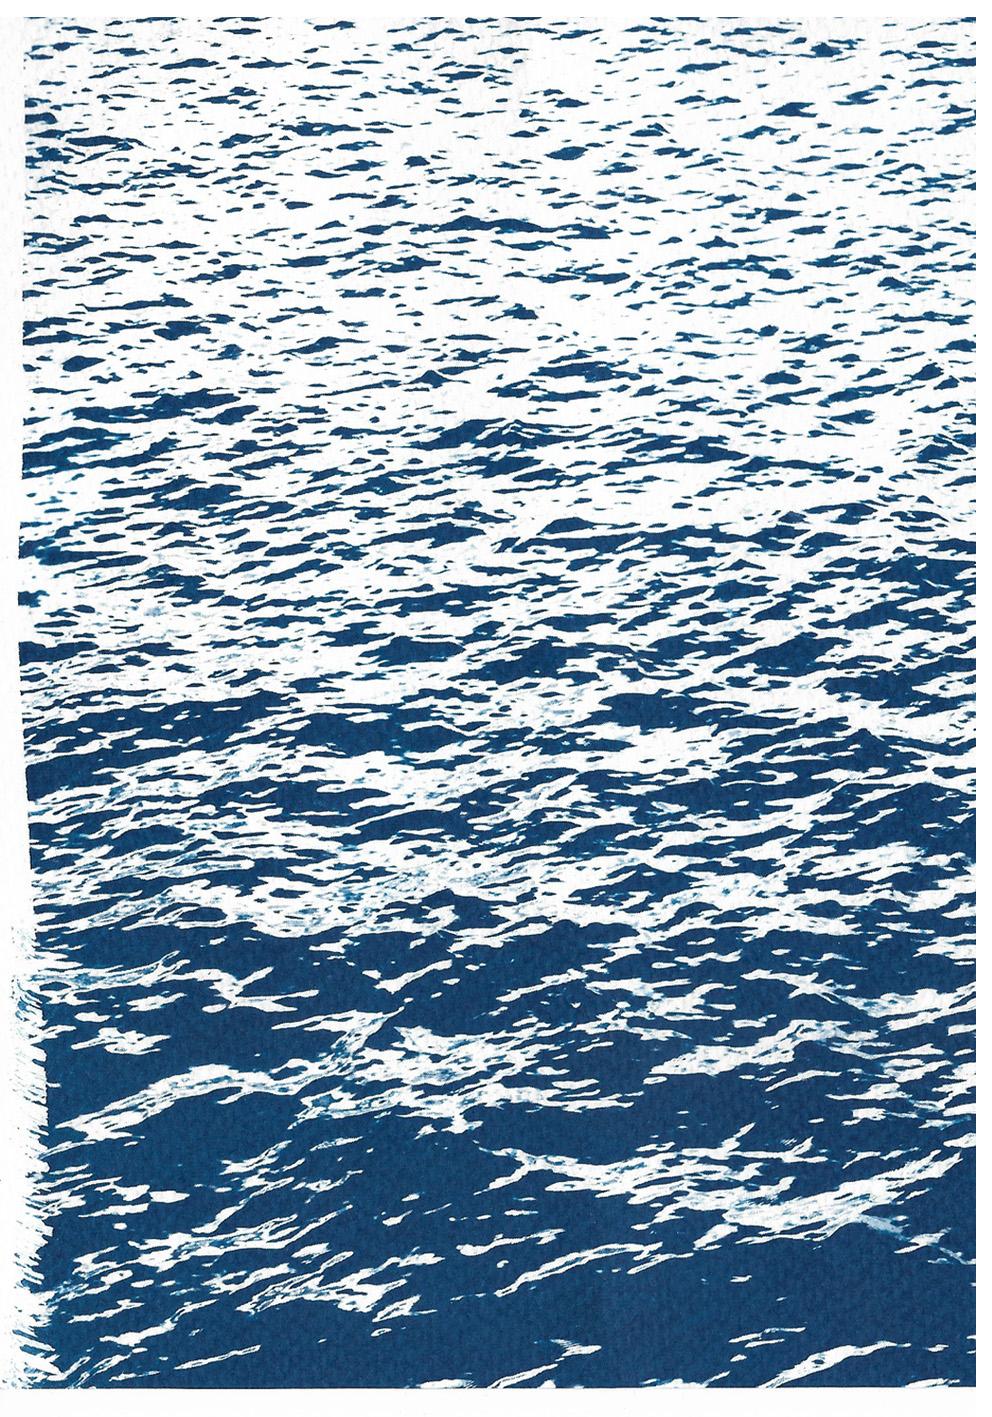 Bright Seascape in Capri, Navy Cyanotype Triptych 100x210 cm, Edition of 20 - Blue Landscape Print by Kind of Cyan